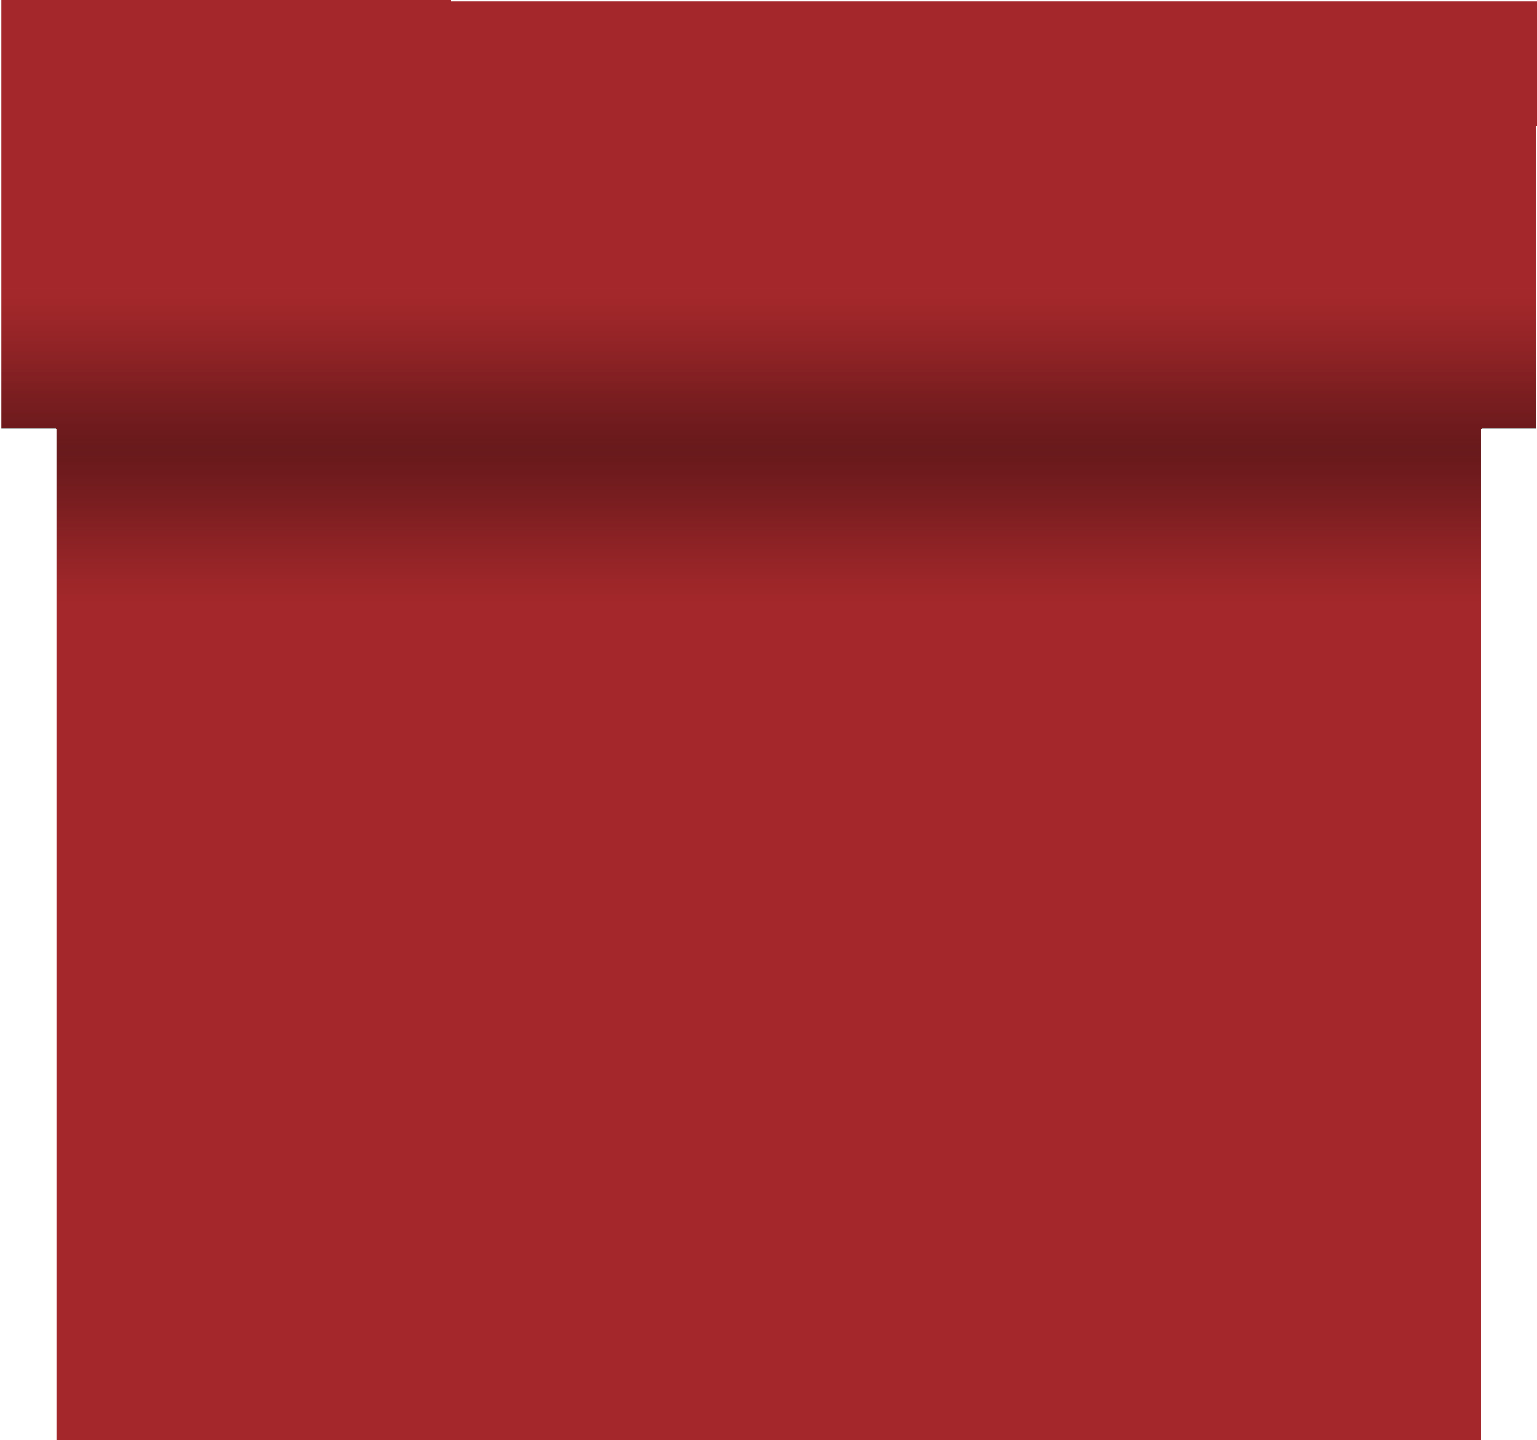 Dunicel poikkiliinarulla punainen 0,4x4,8m perforoitu